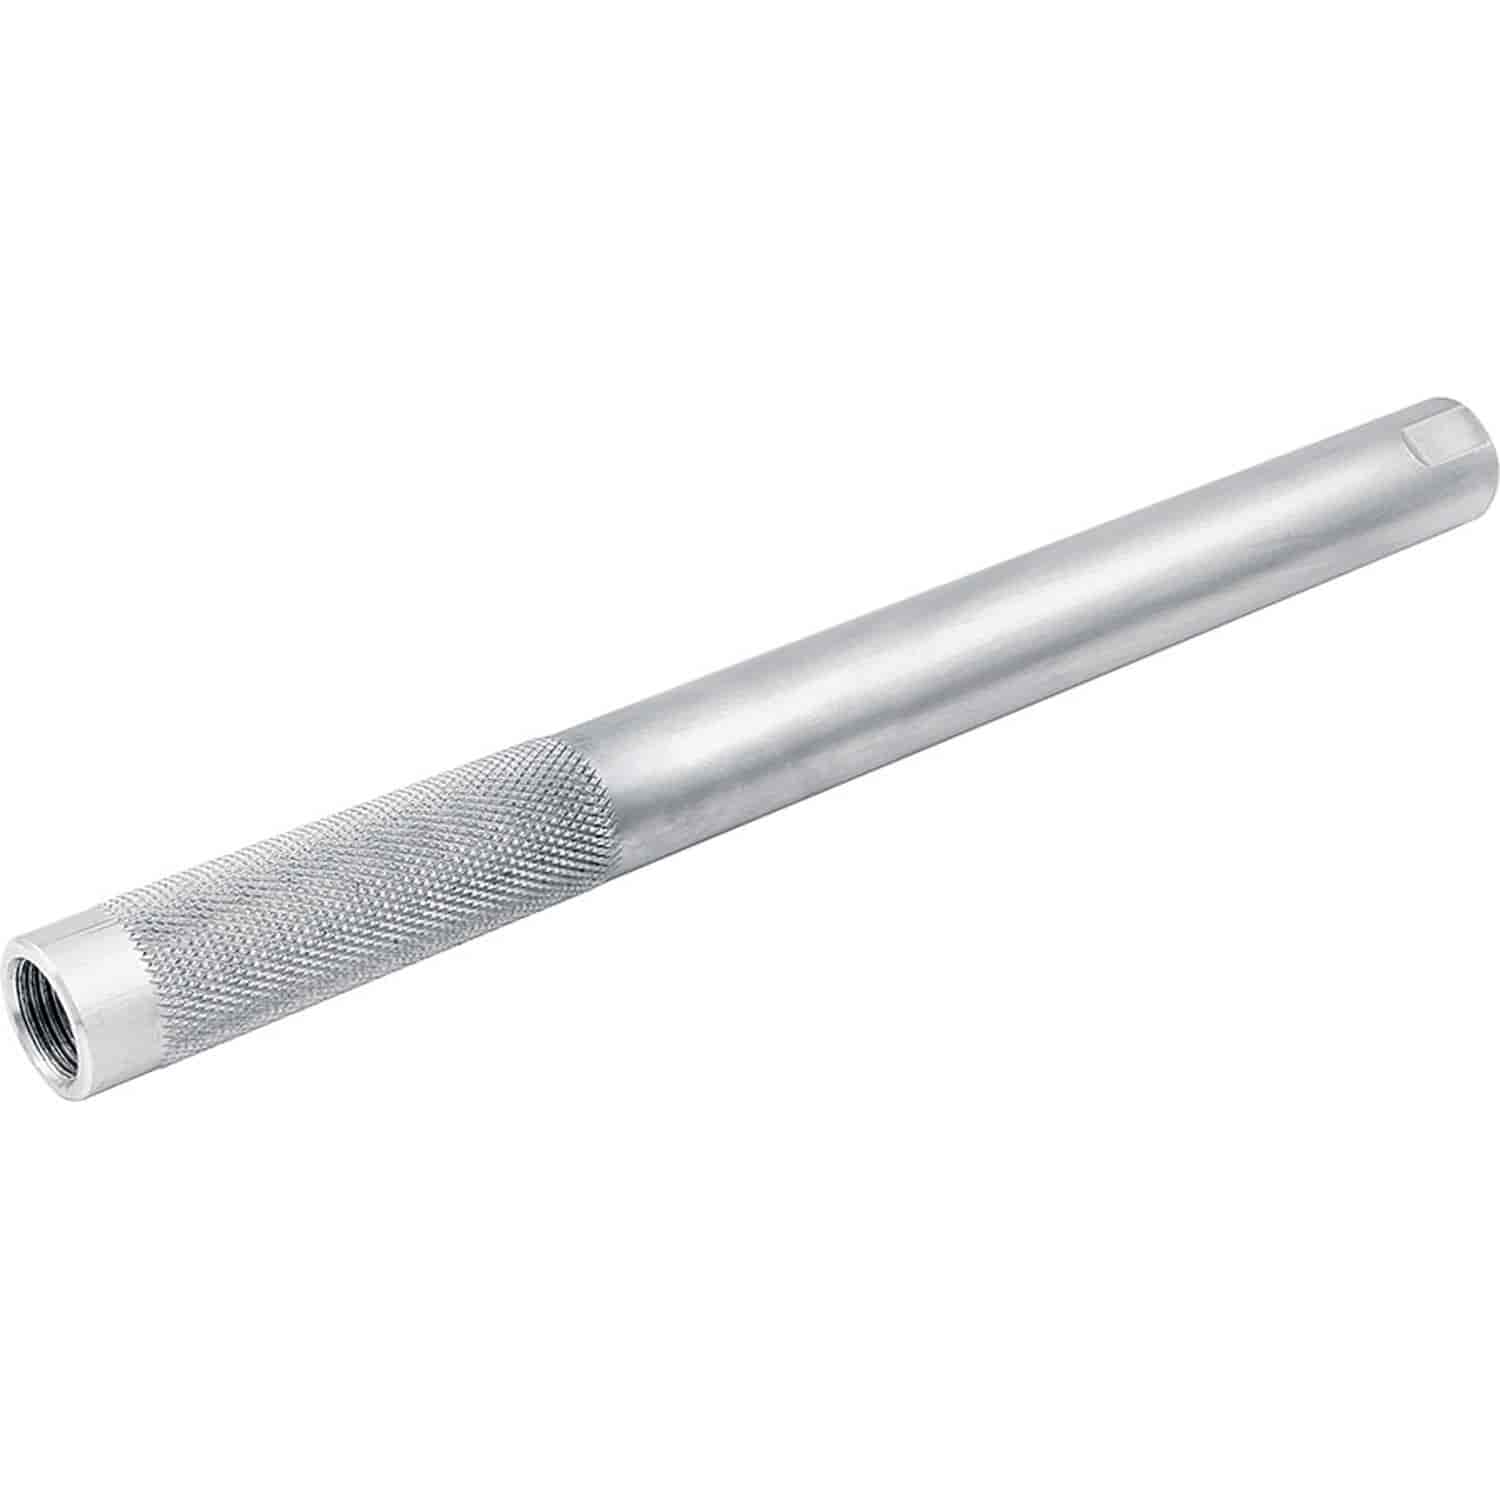 Swedged Aluminum Tie Rod Tube Length: 25